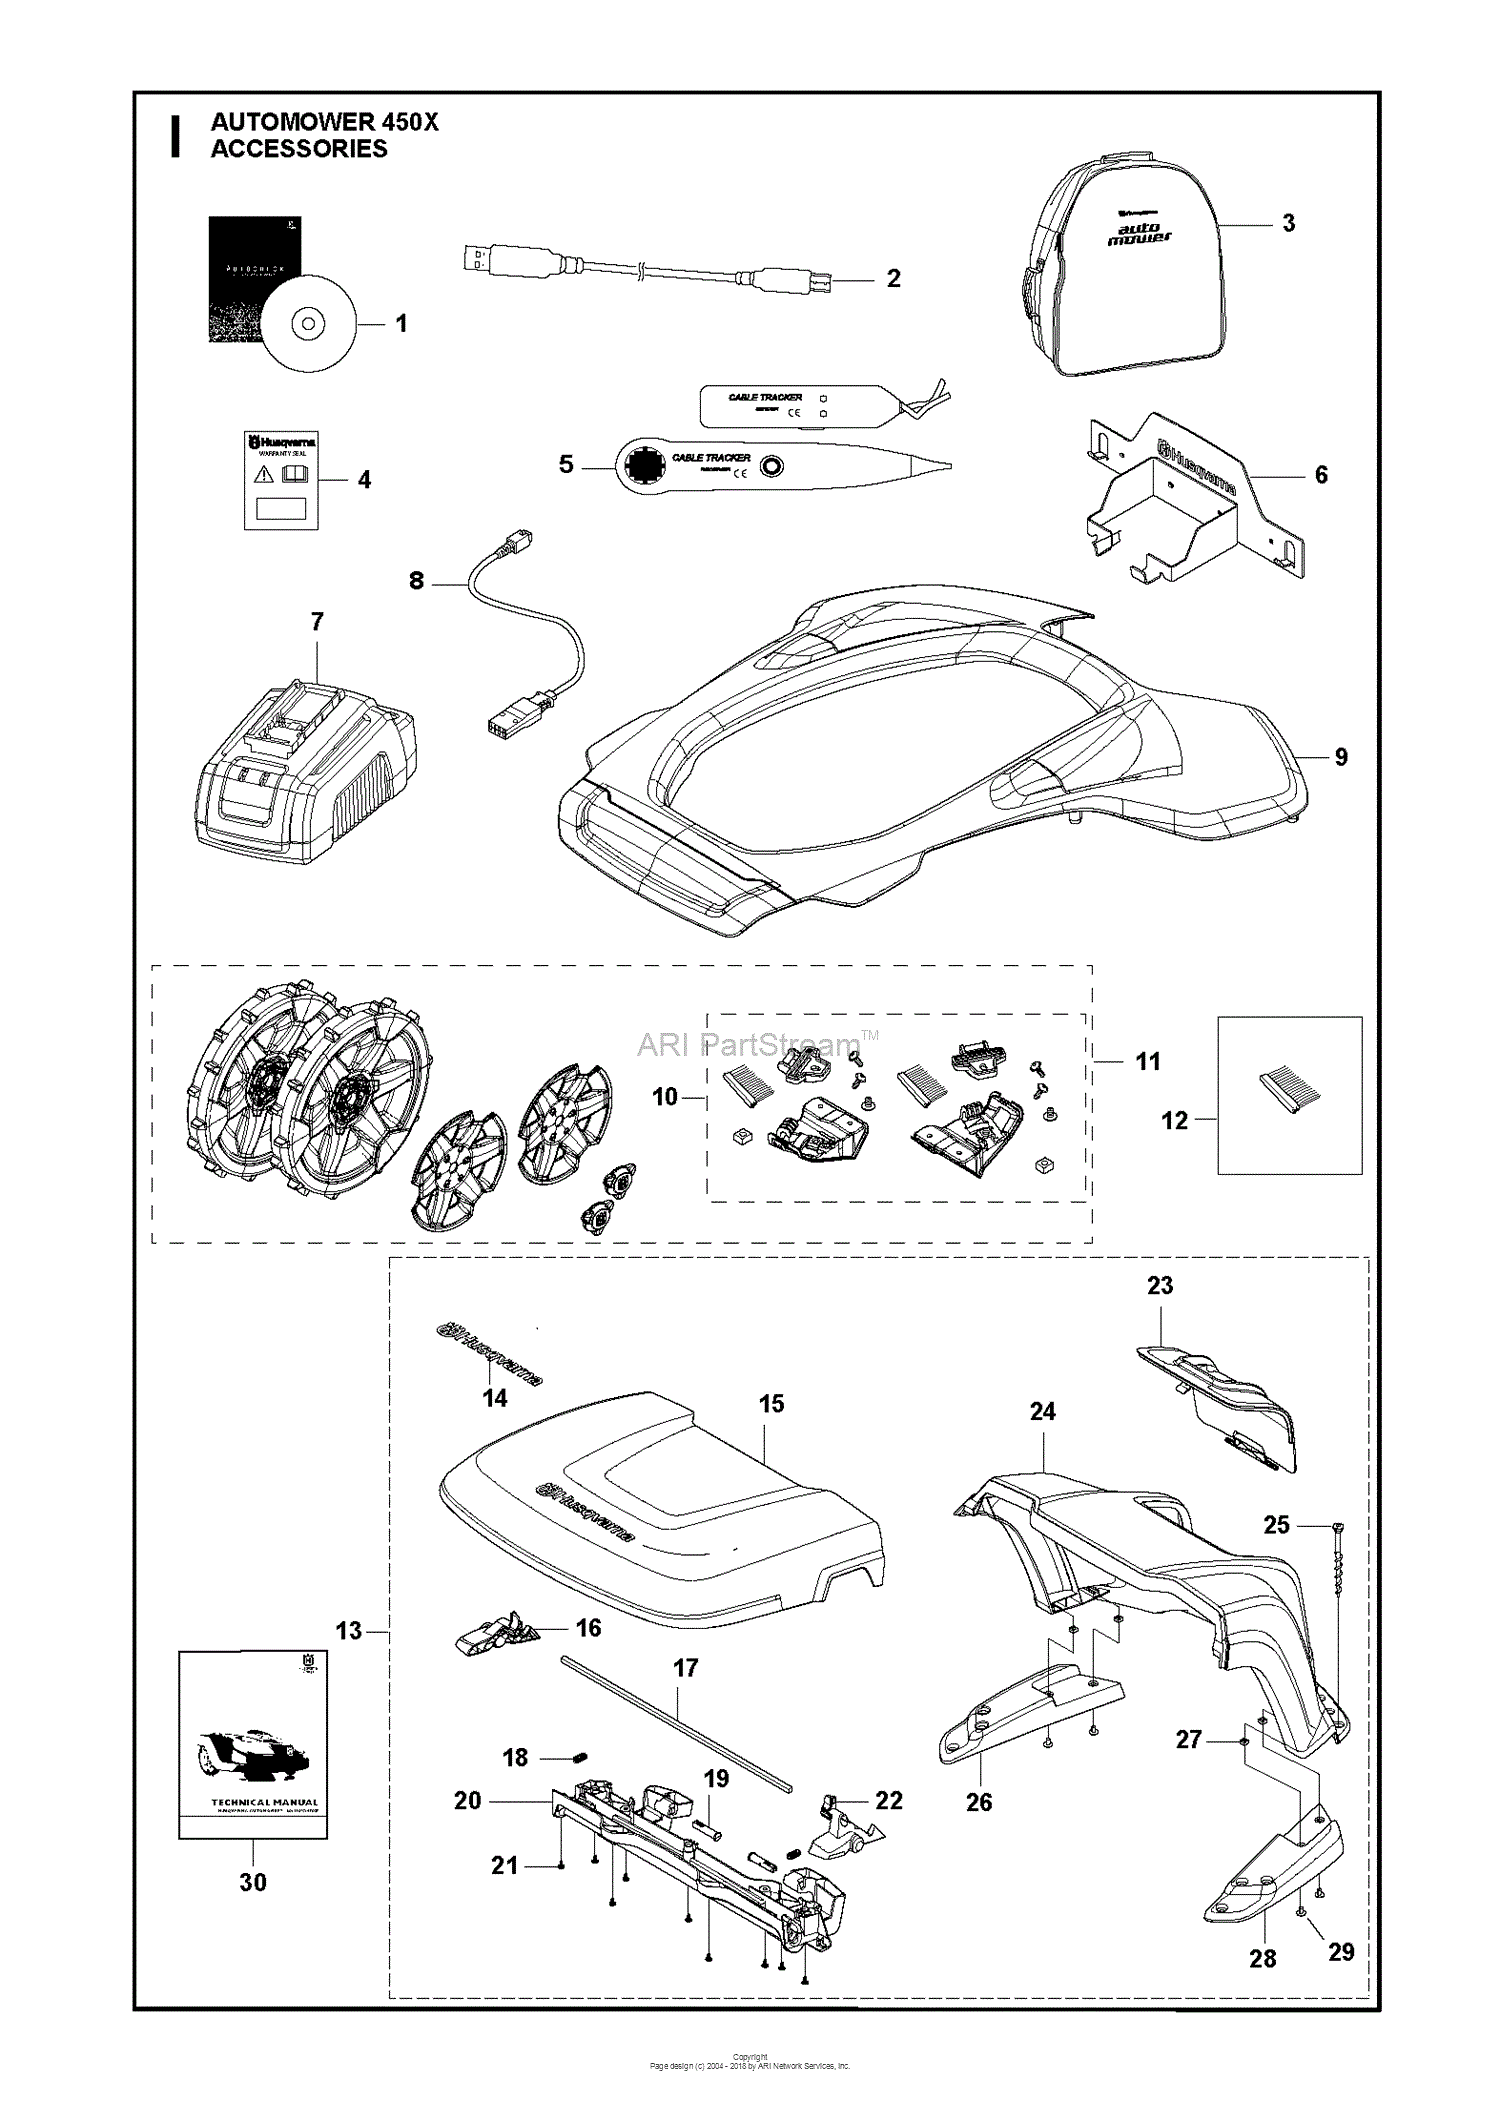 Husqvarna AUTOMOWER 450X Parts Diagram for ACCESSORIES